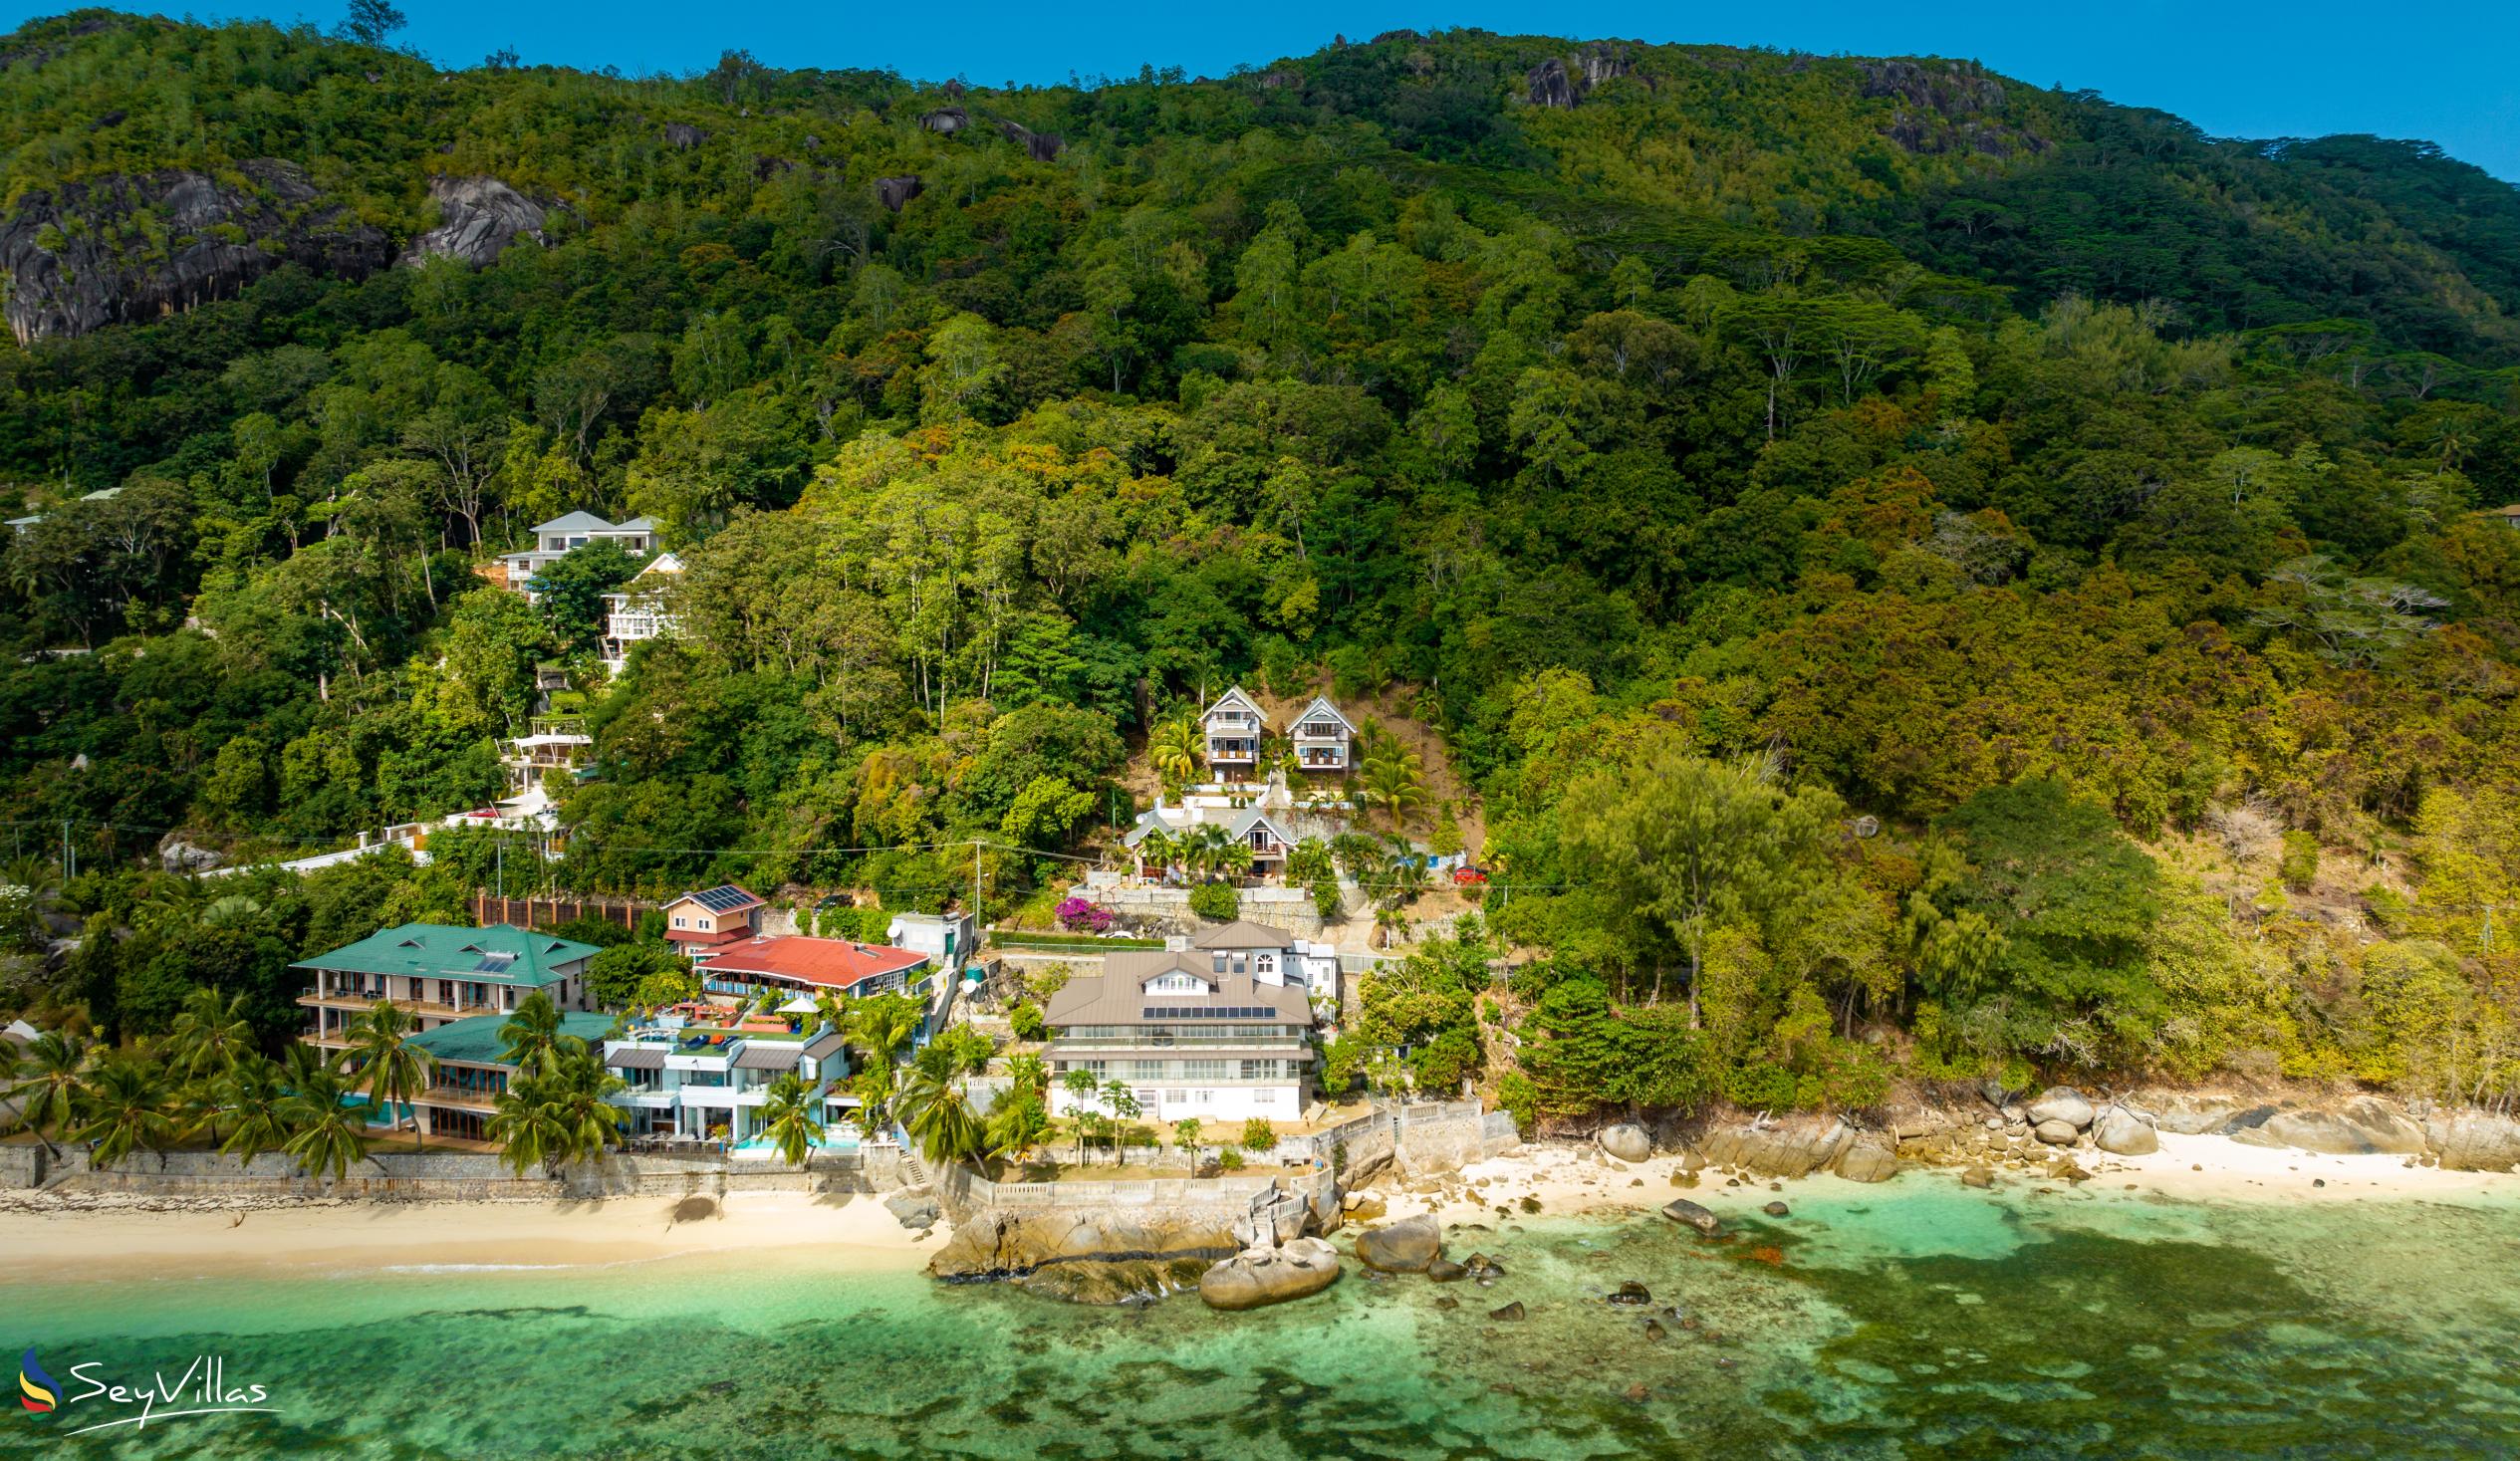 Foto 13: Mouggae Blues Villas - Location - Mahé (Seychelles)